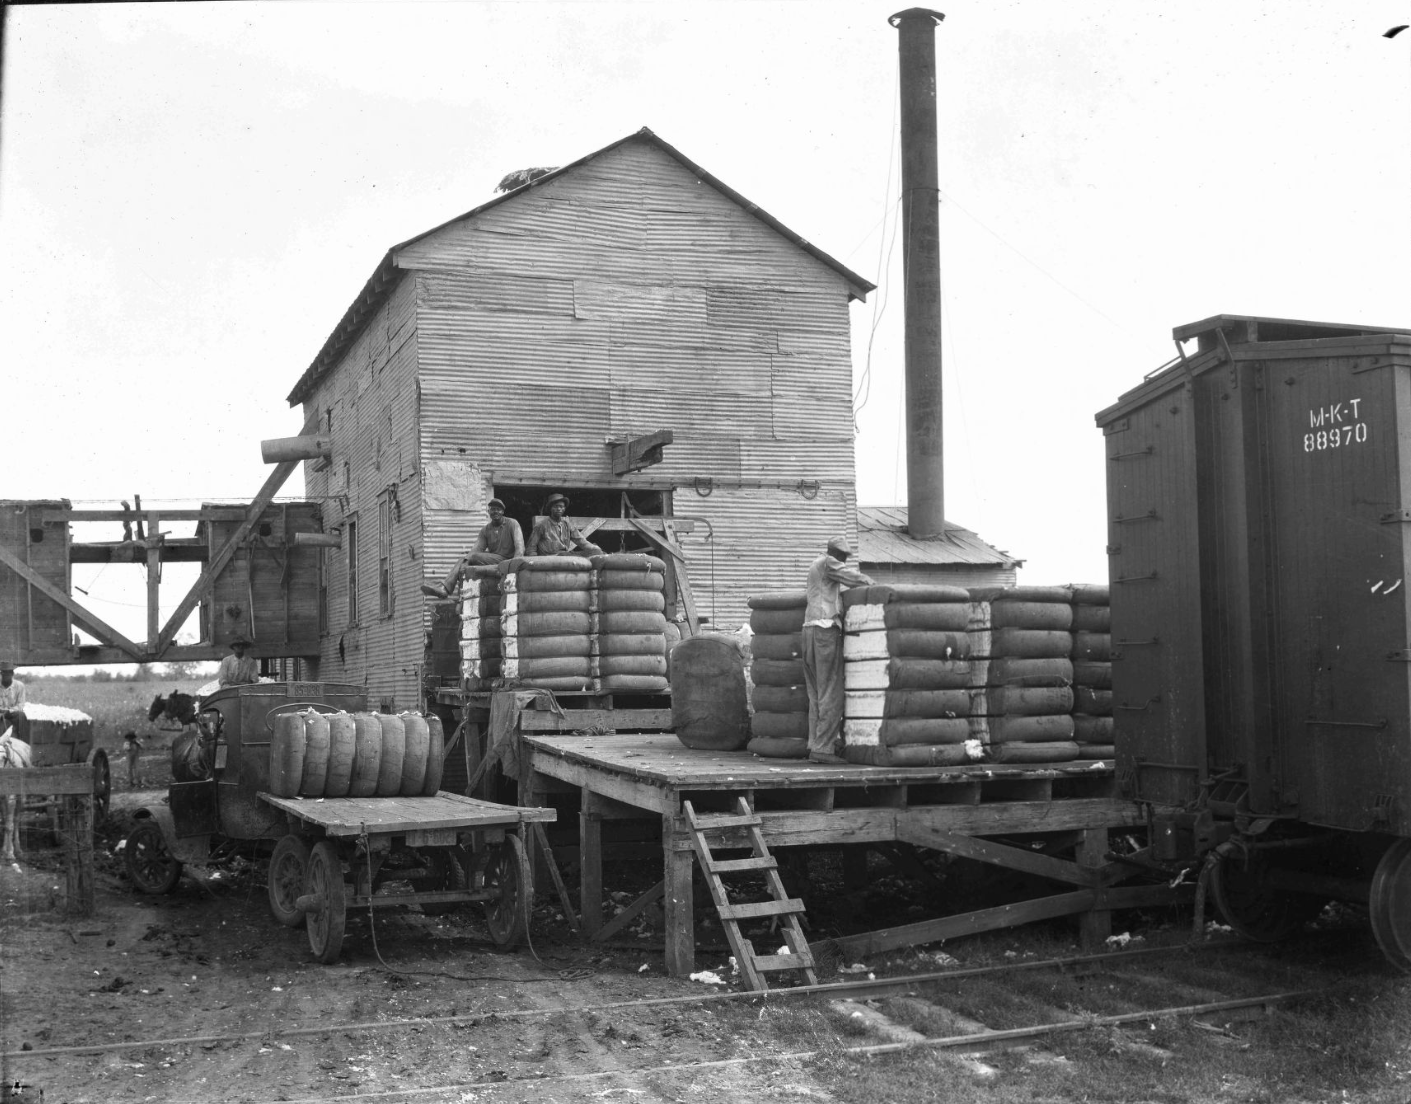 Three Black men loading bales of cotton onto a railcar